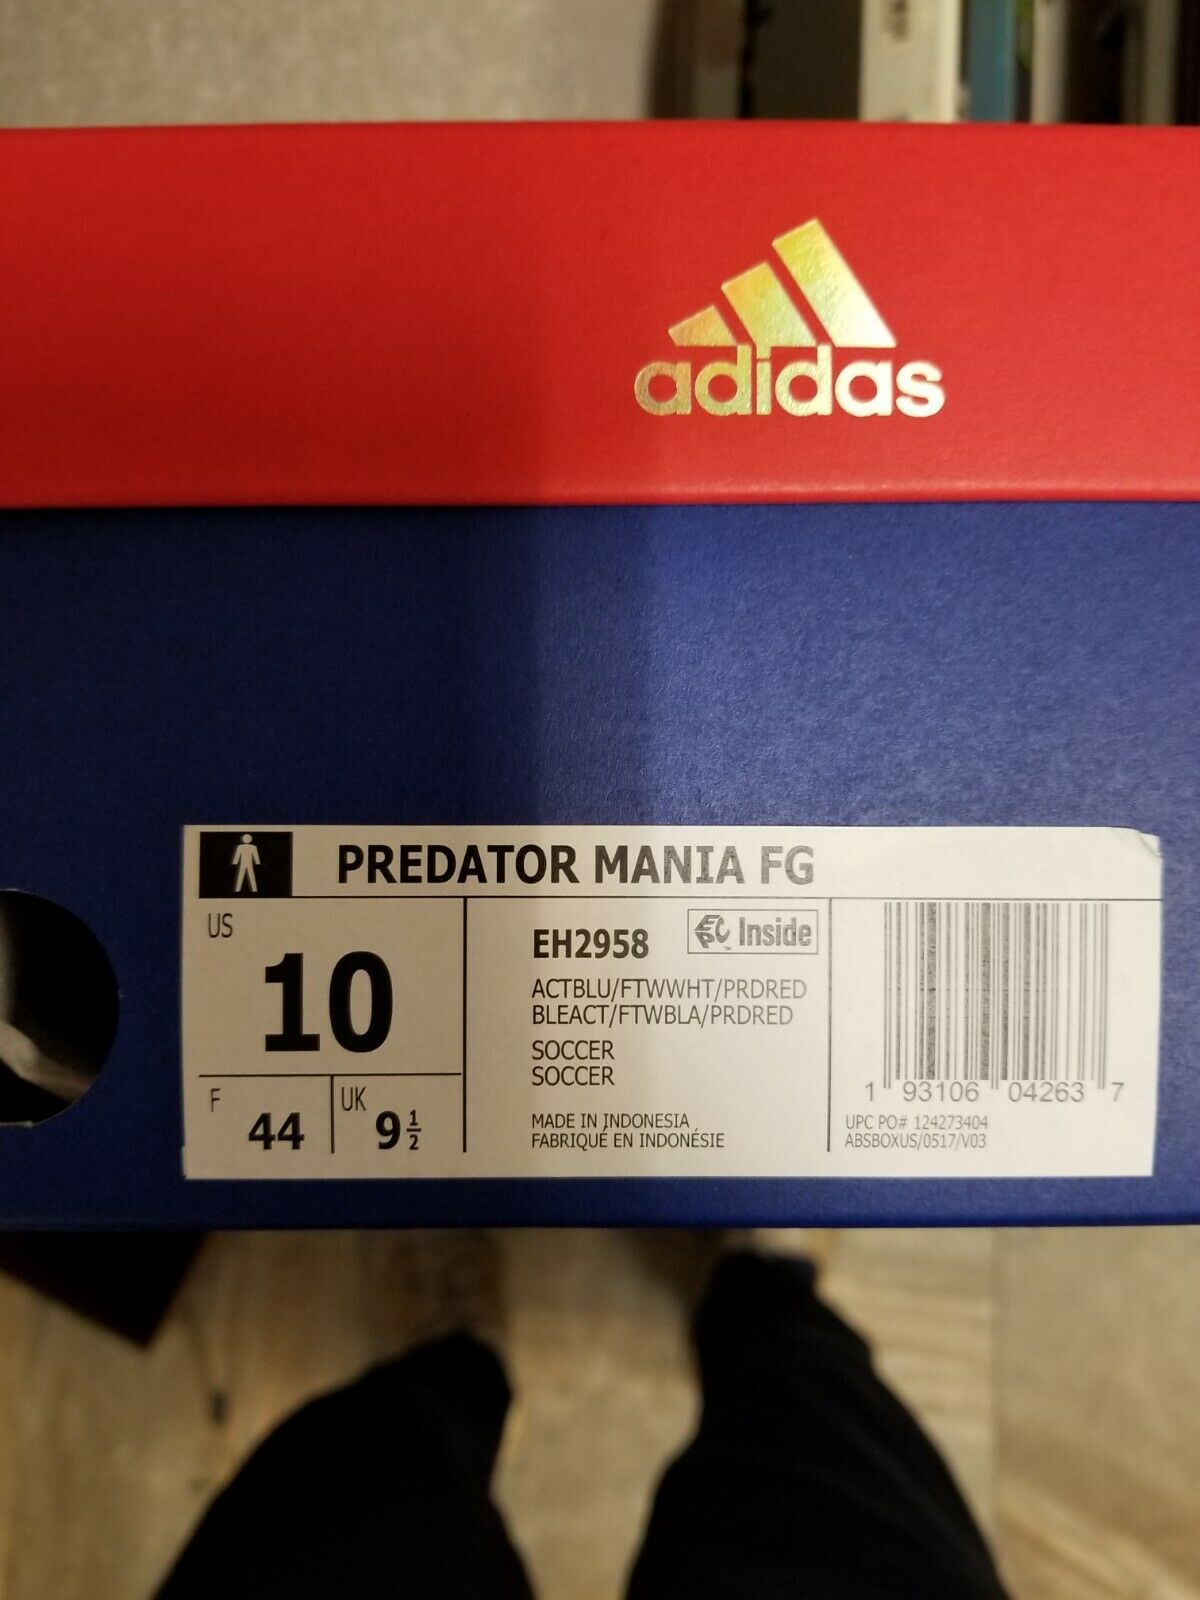 Adidas Predator Mania Fg Us 10 Limited edition